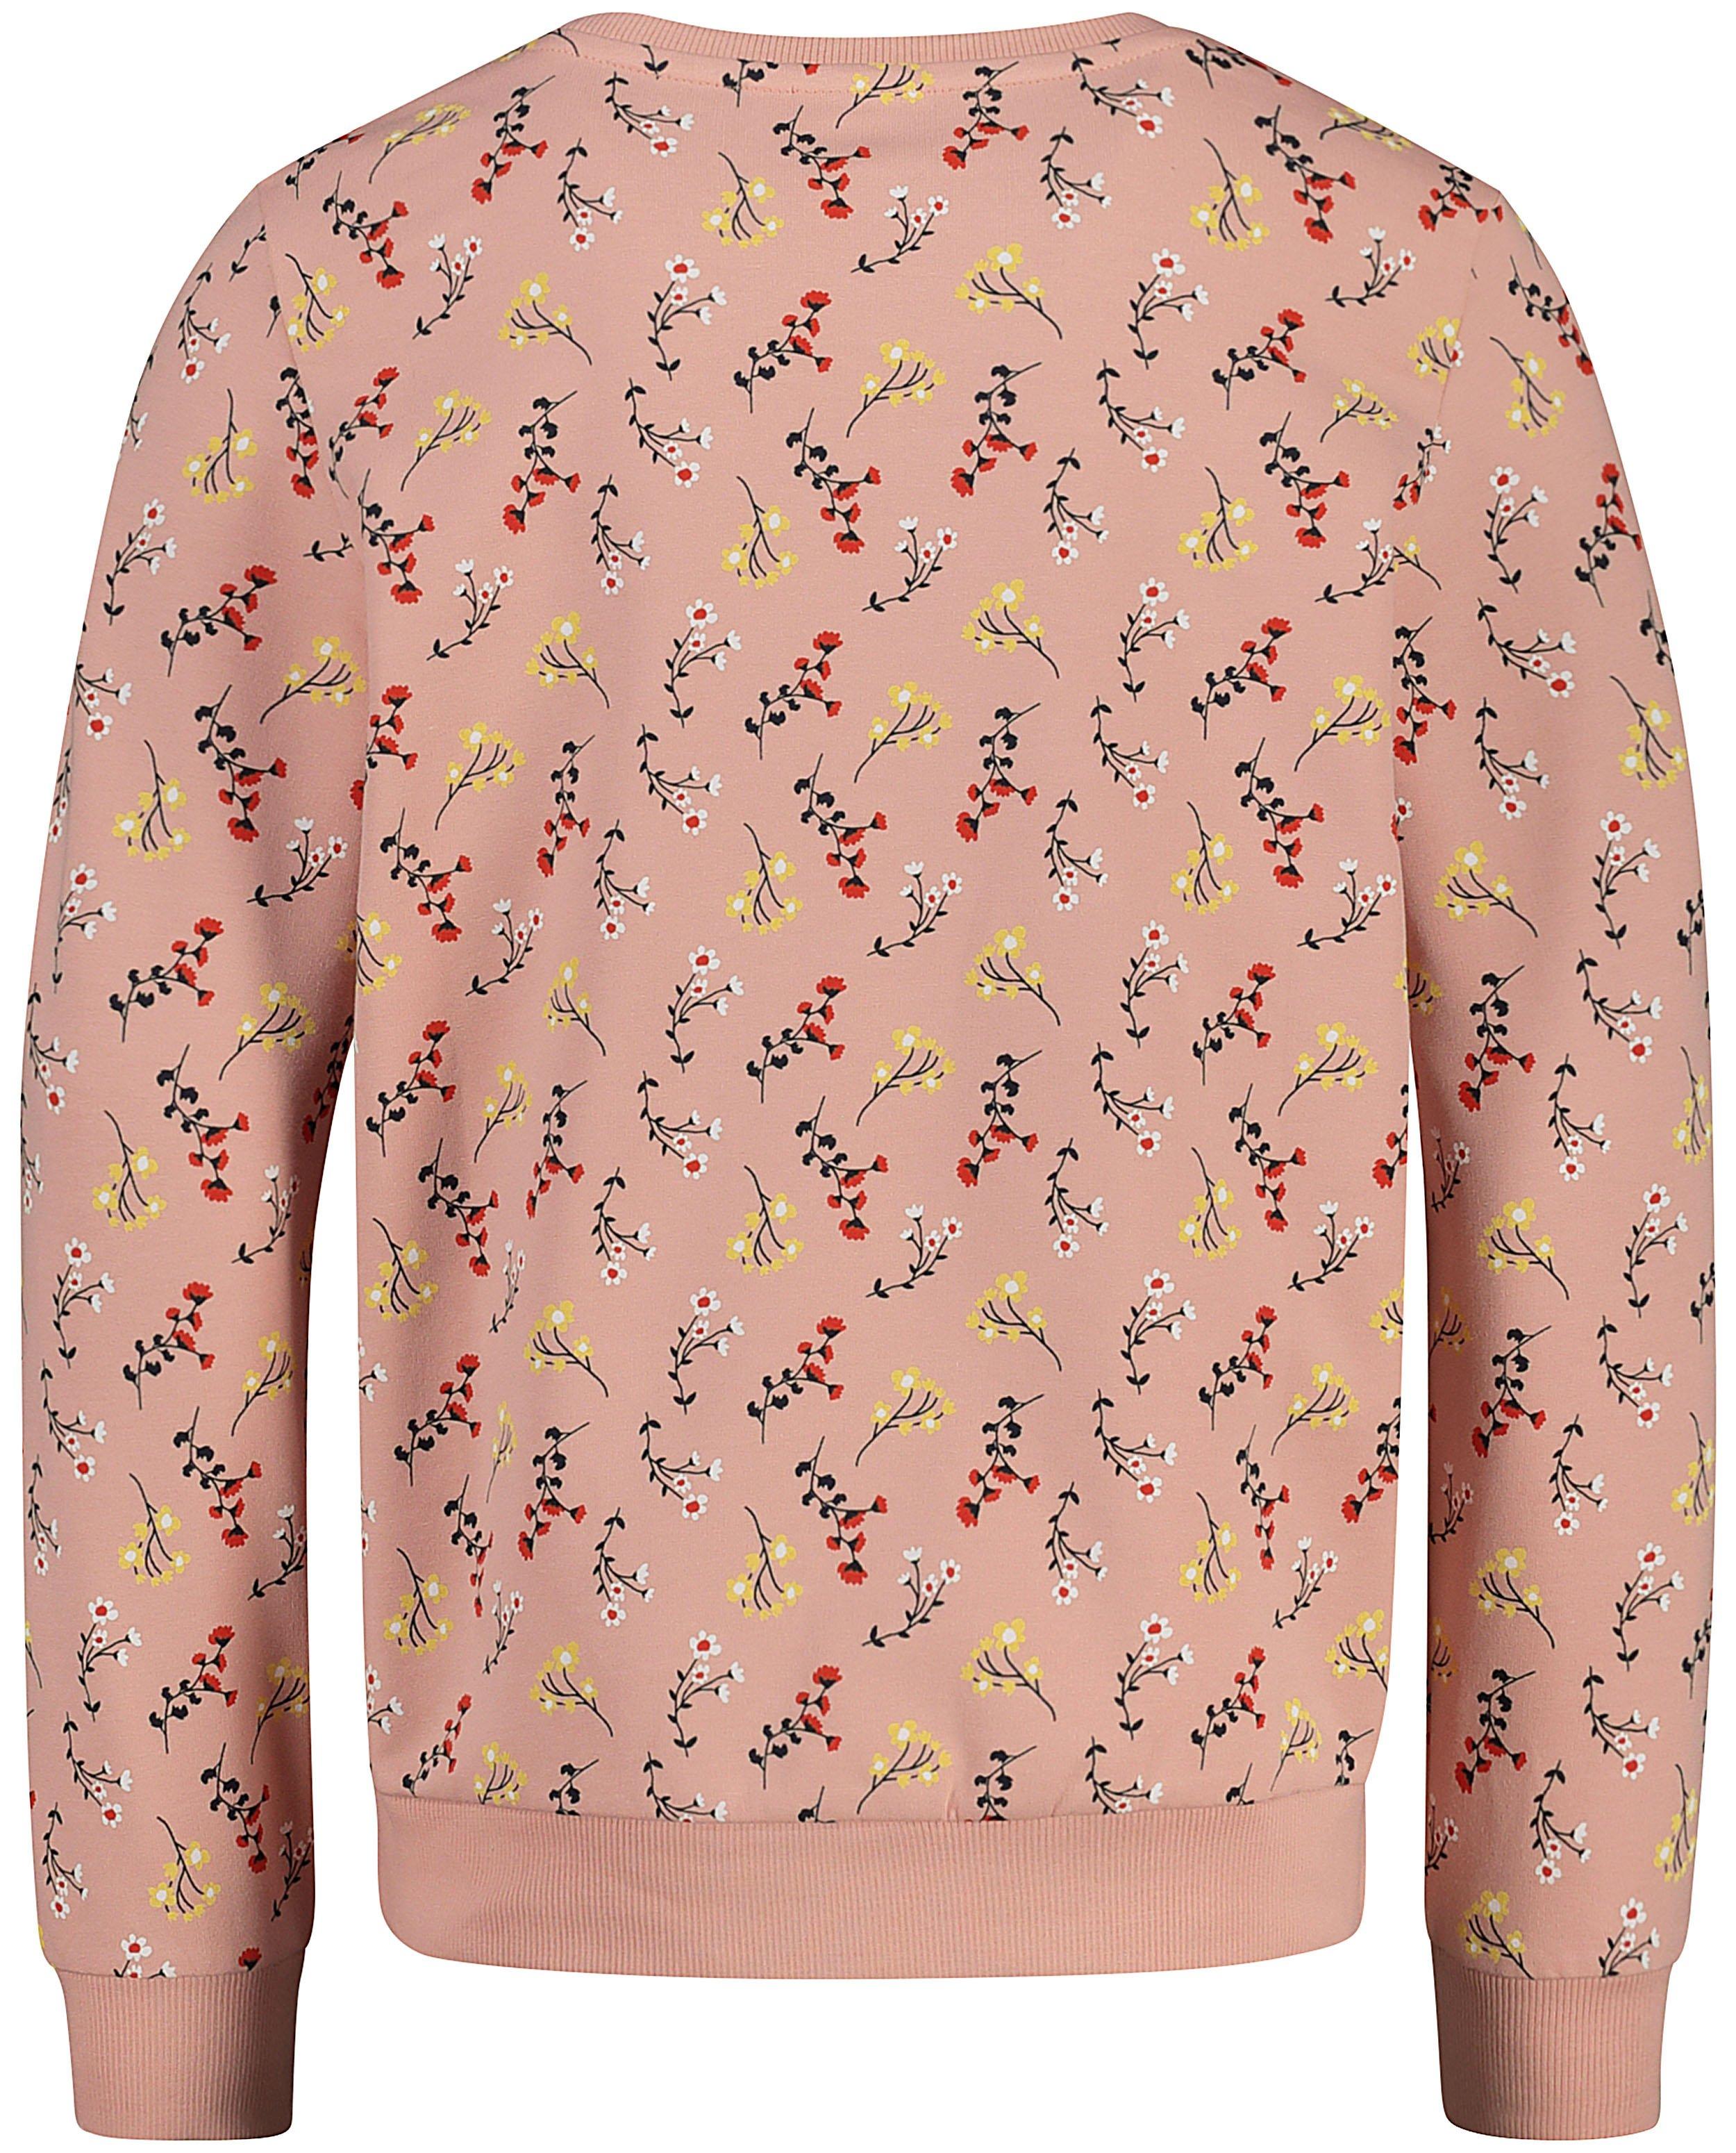 Sweaters - Roze sweater met print #LikeMe